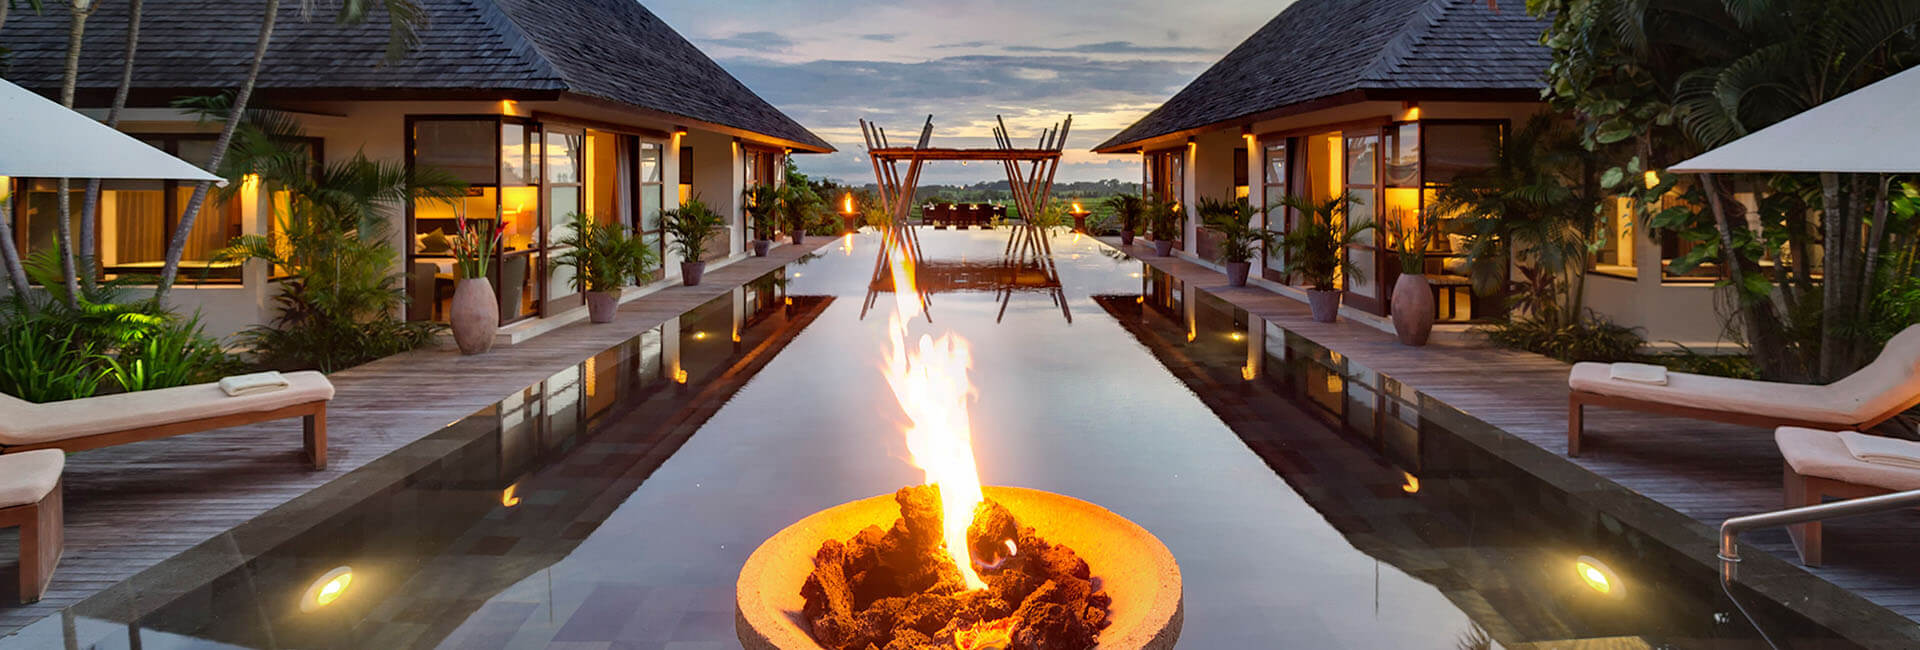 Quick Facts | Villa Mandalay - Seseh Beach 7 bedroom luxury villa, Bali